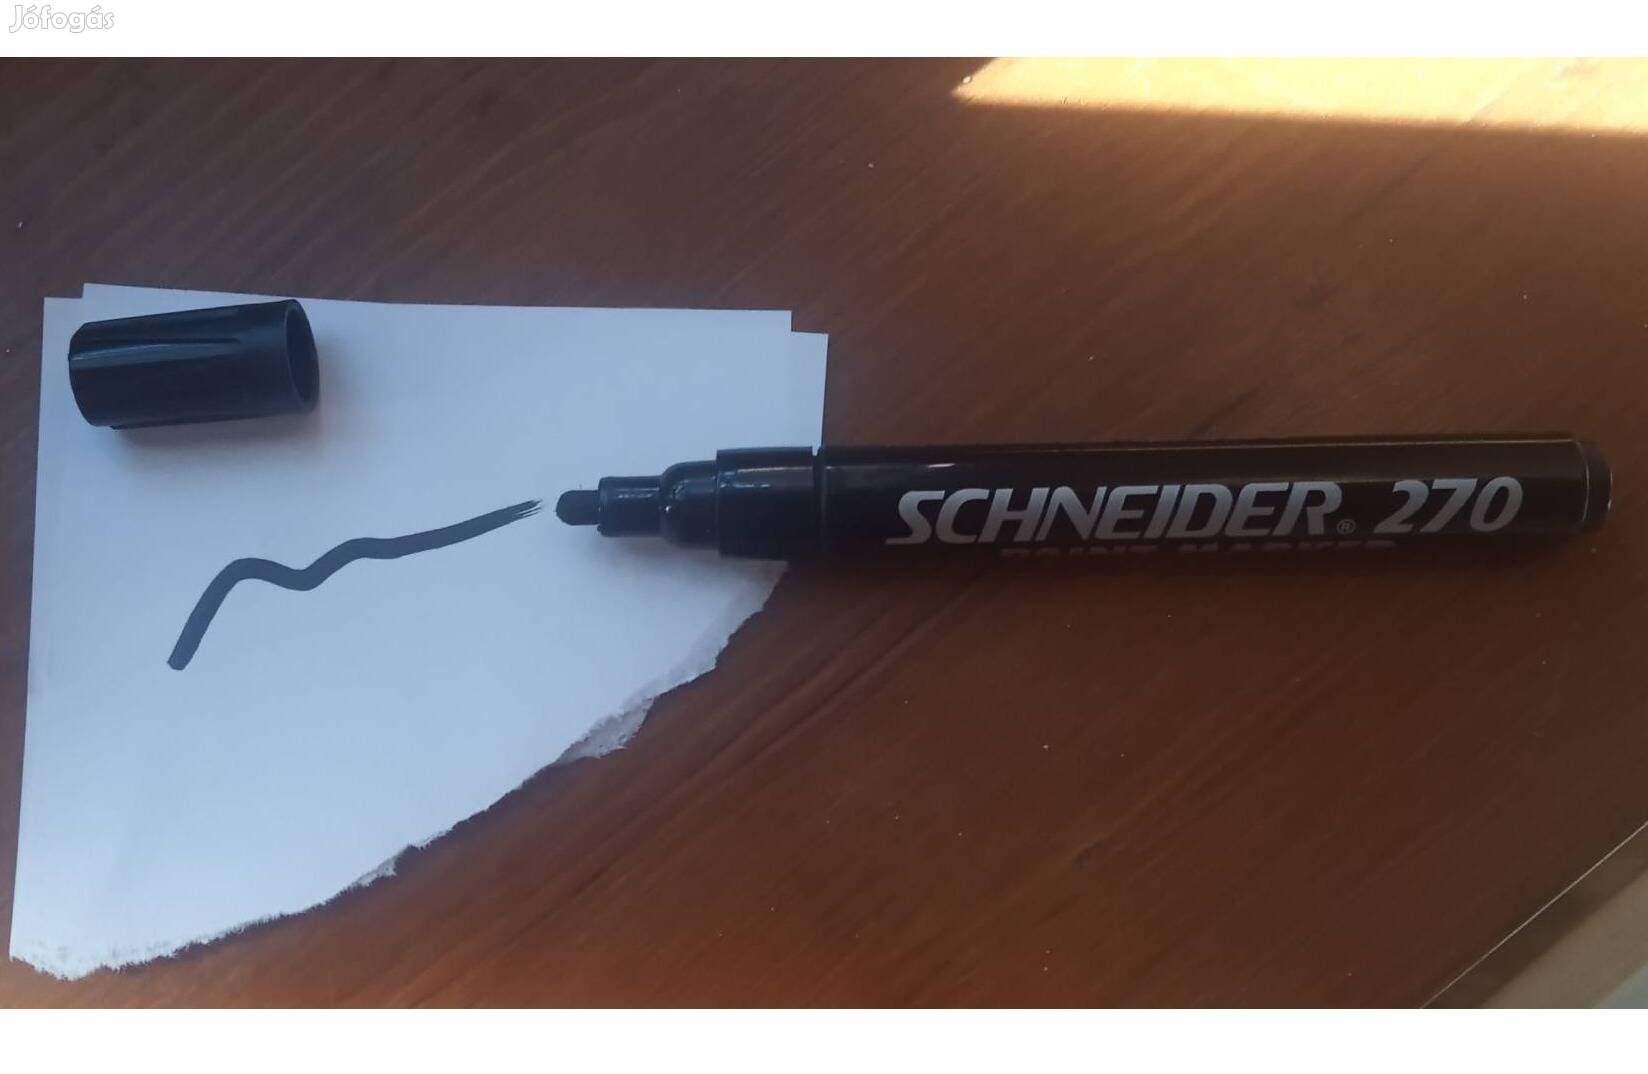 Schneider 270 lakkfilc, marker, lakkmarker (fekete, új) sok felülethez